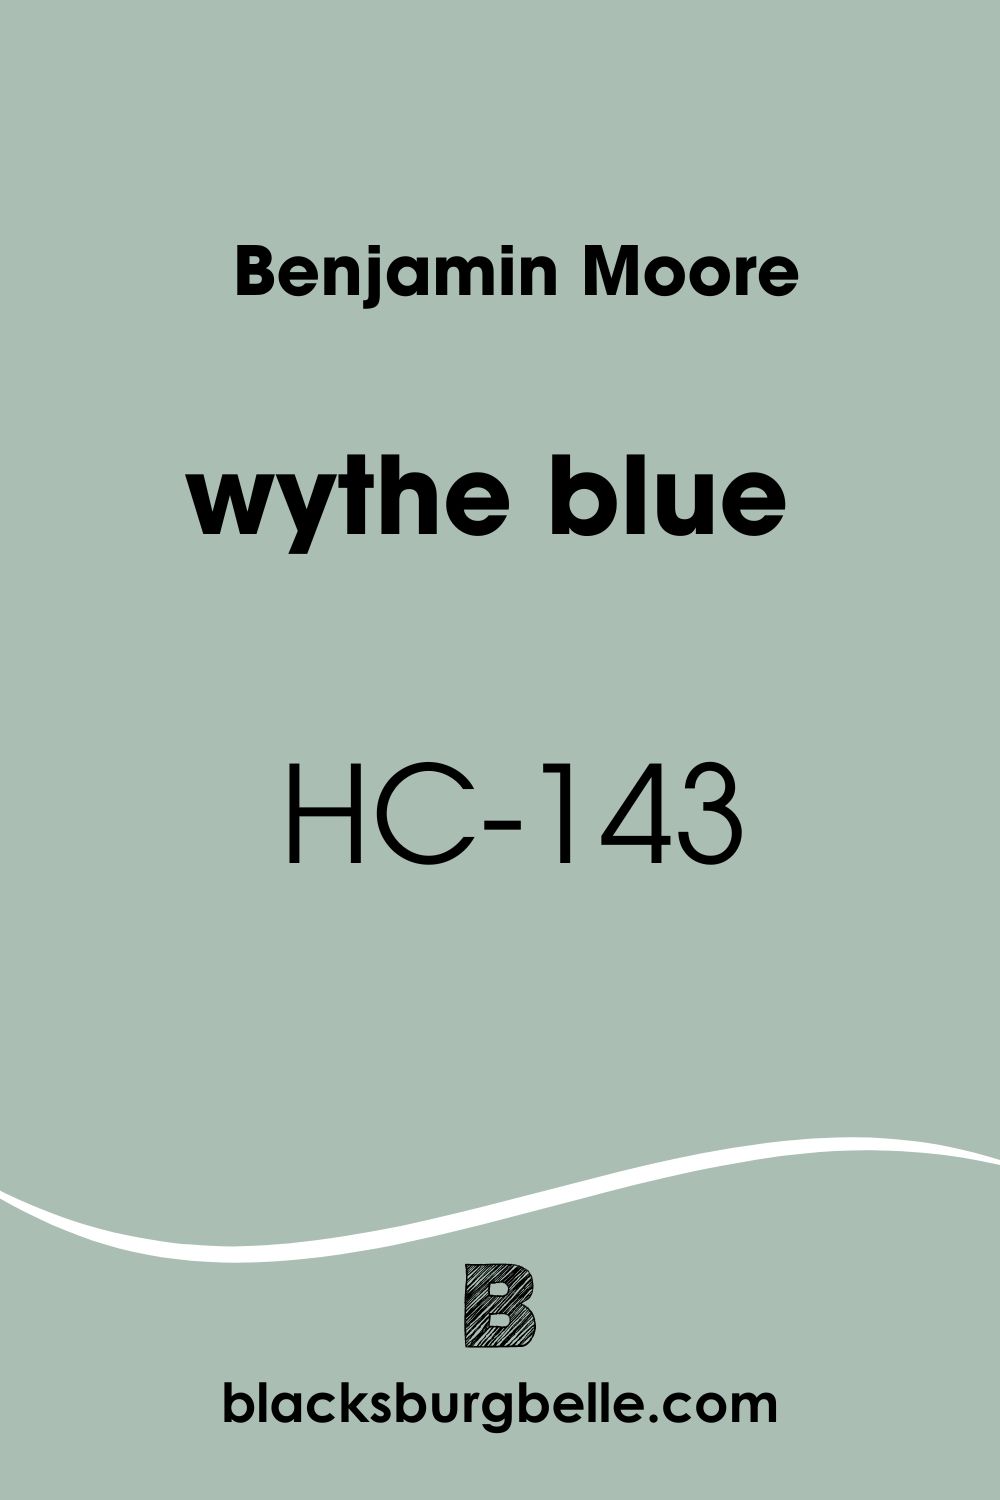 benjamin moore wythe blue hc-143